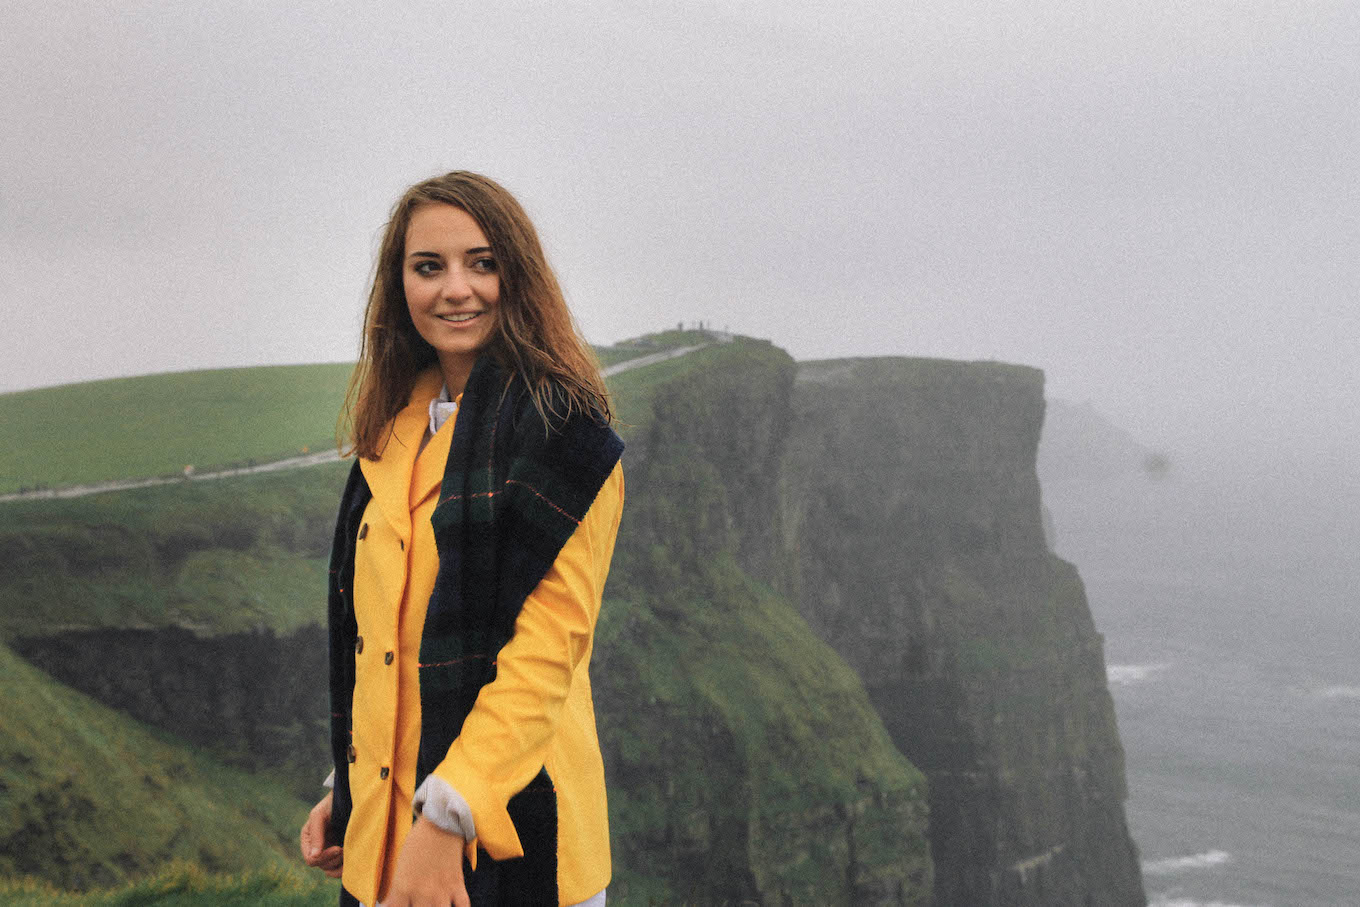 Cliffs of Moher, Ireland | The Coastal Confidence by Aubrey Yandow